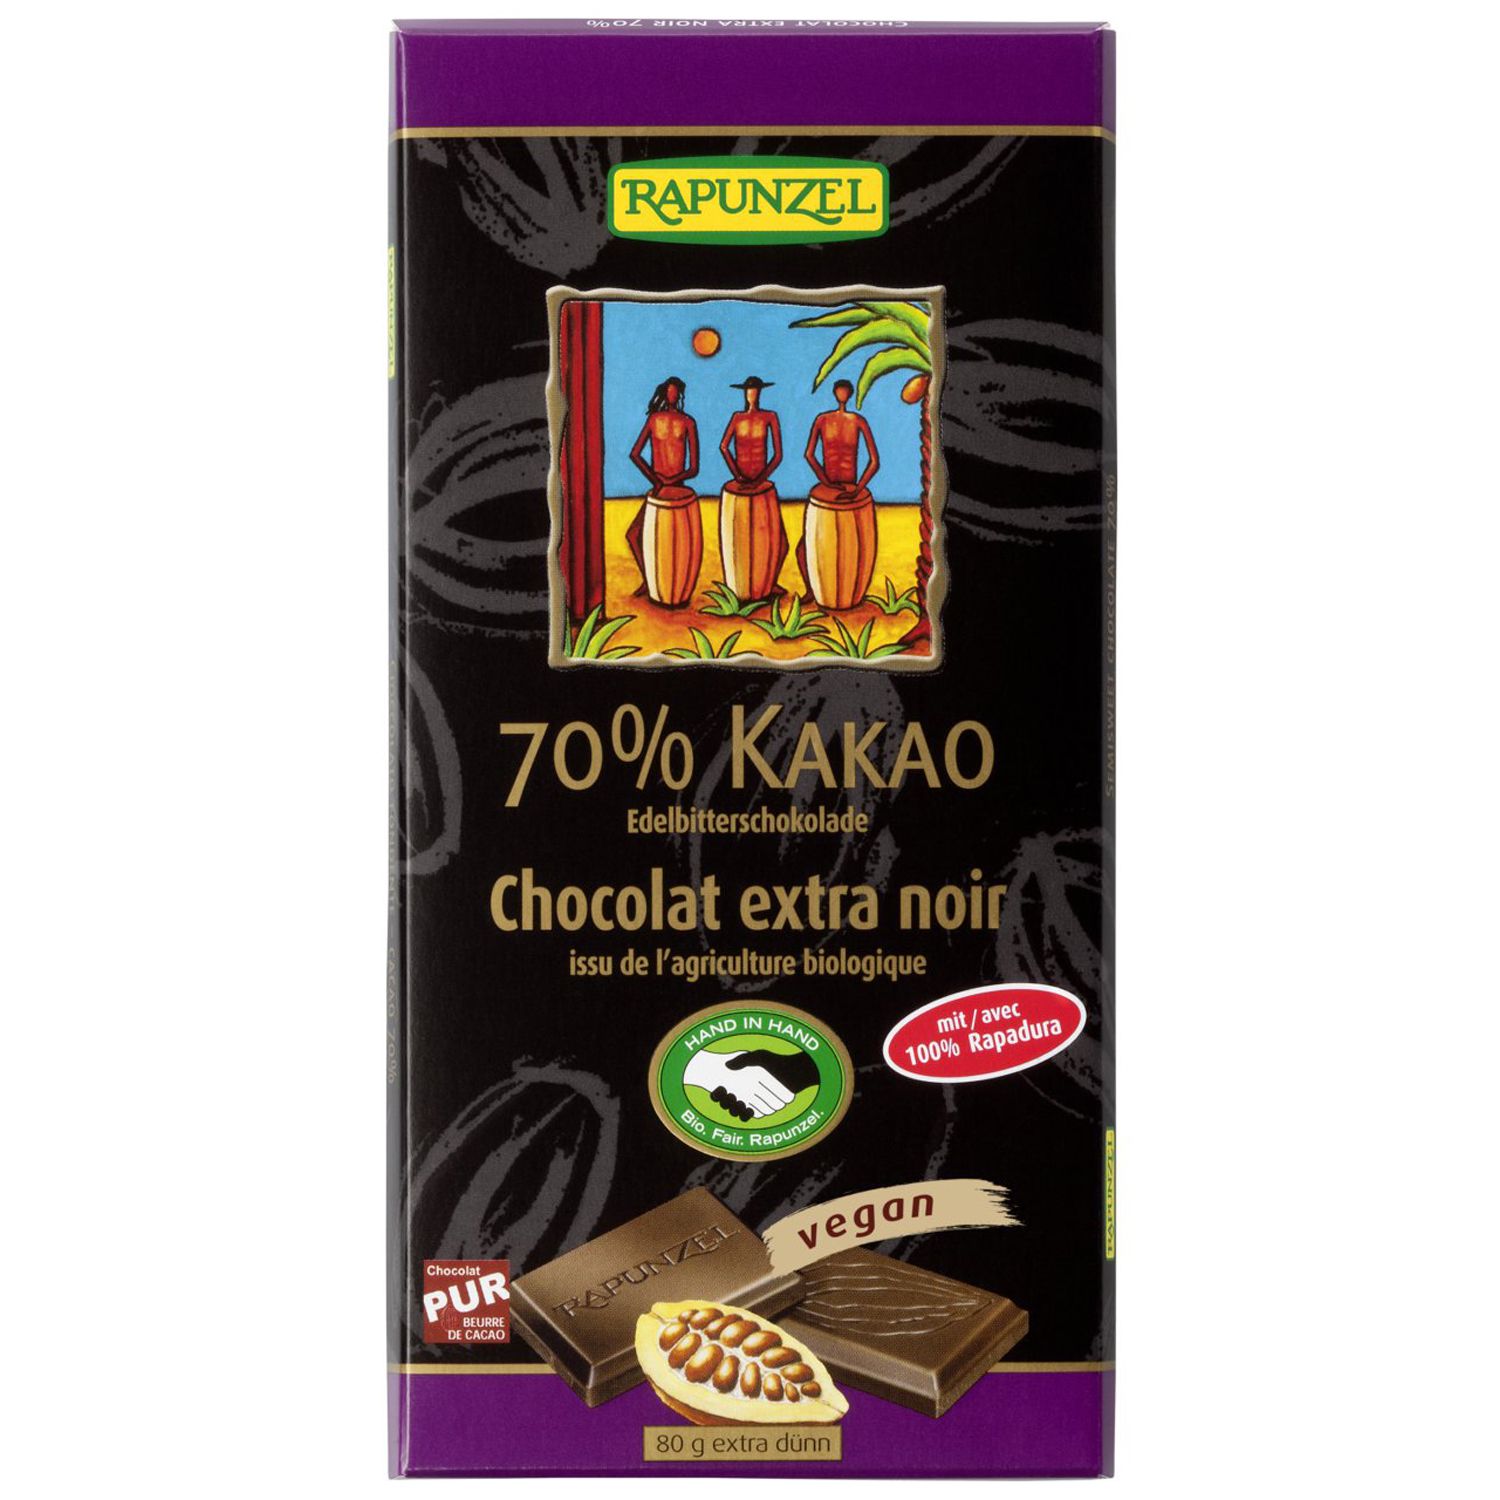 RAPUNZEL Edelbitter Schokolade 70% Kakao (Rapadura)